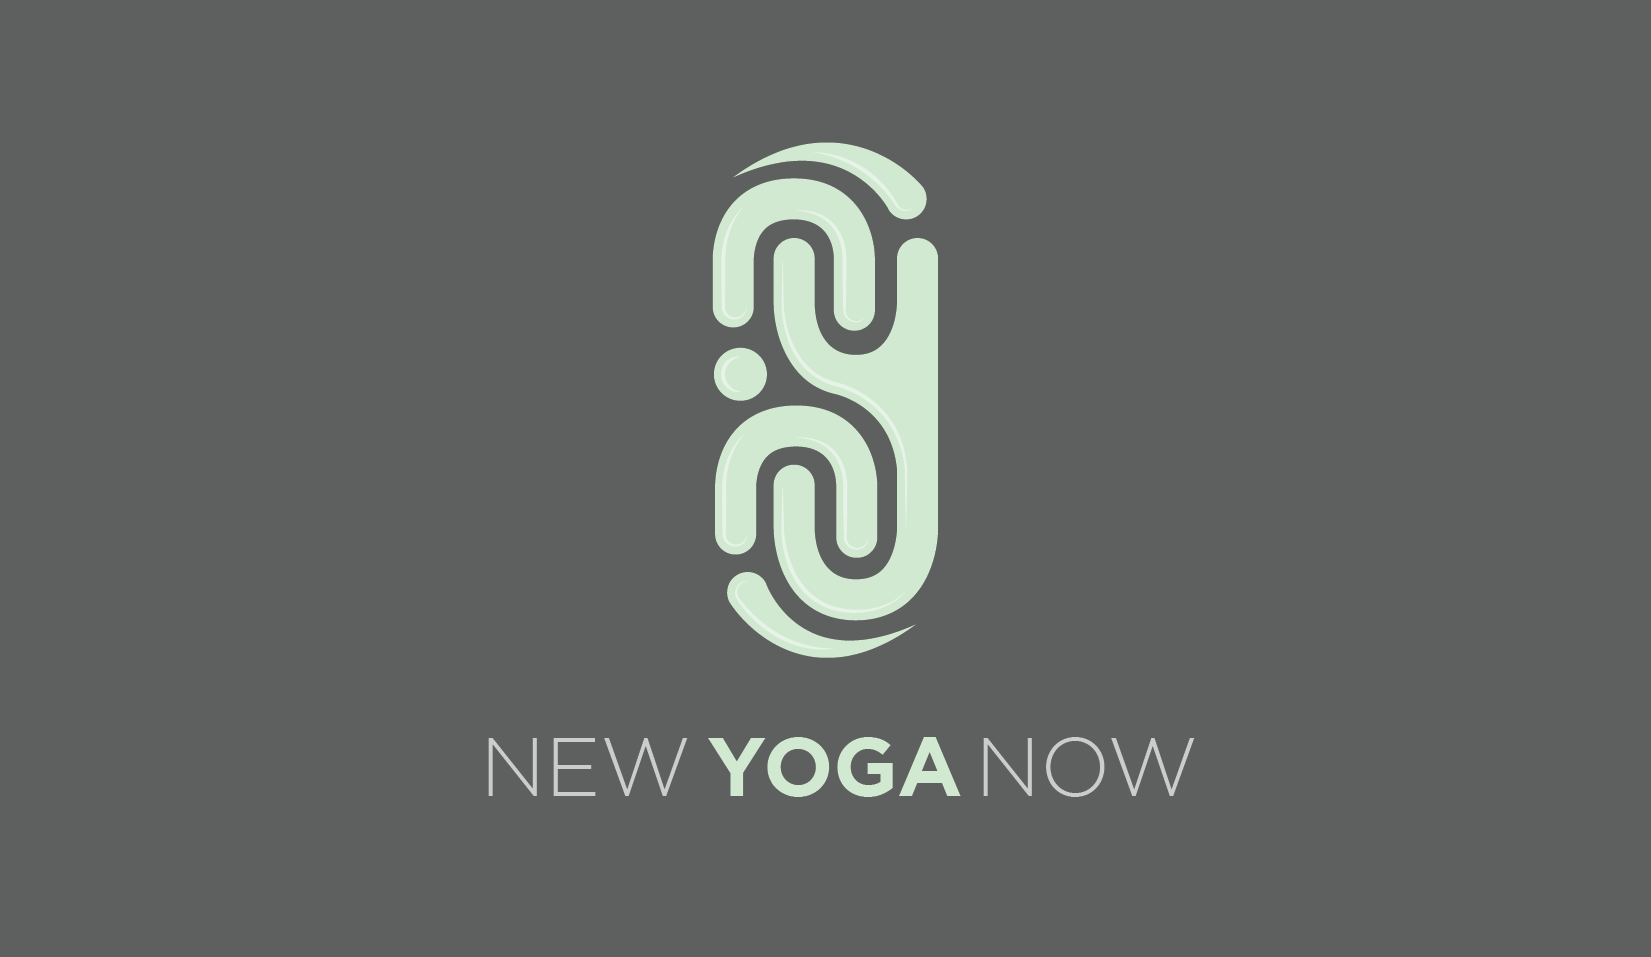 new_yoga_now_logo_Artboard 1 copy 4.png